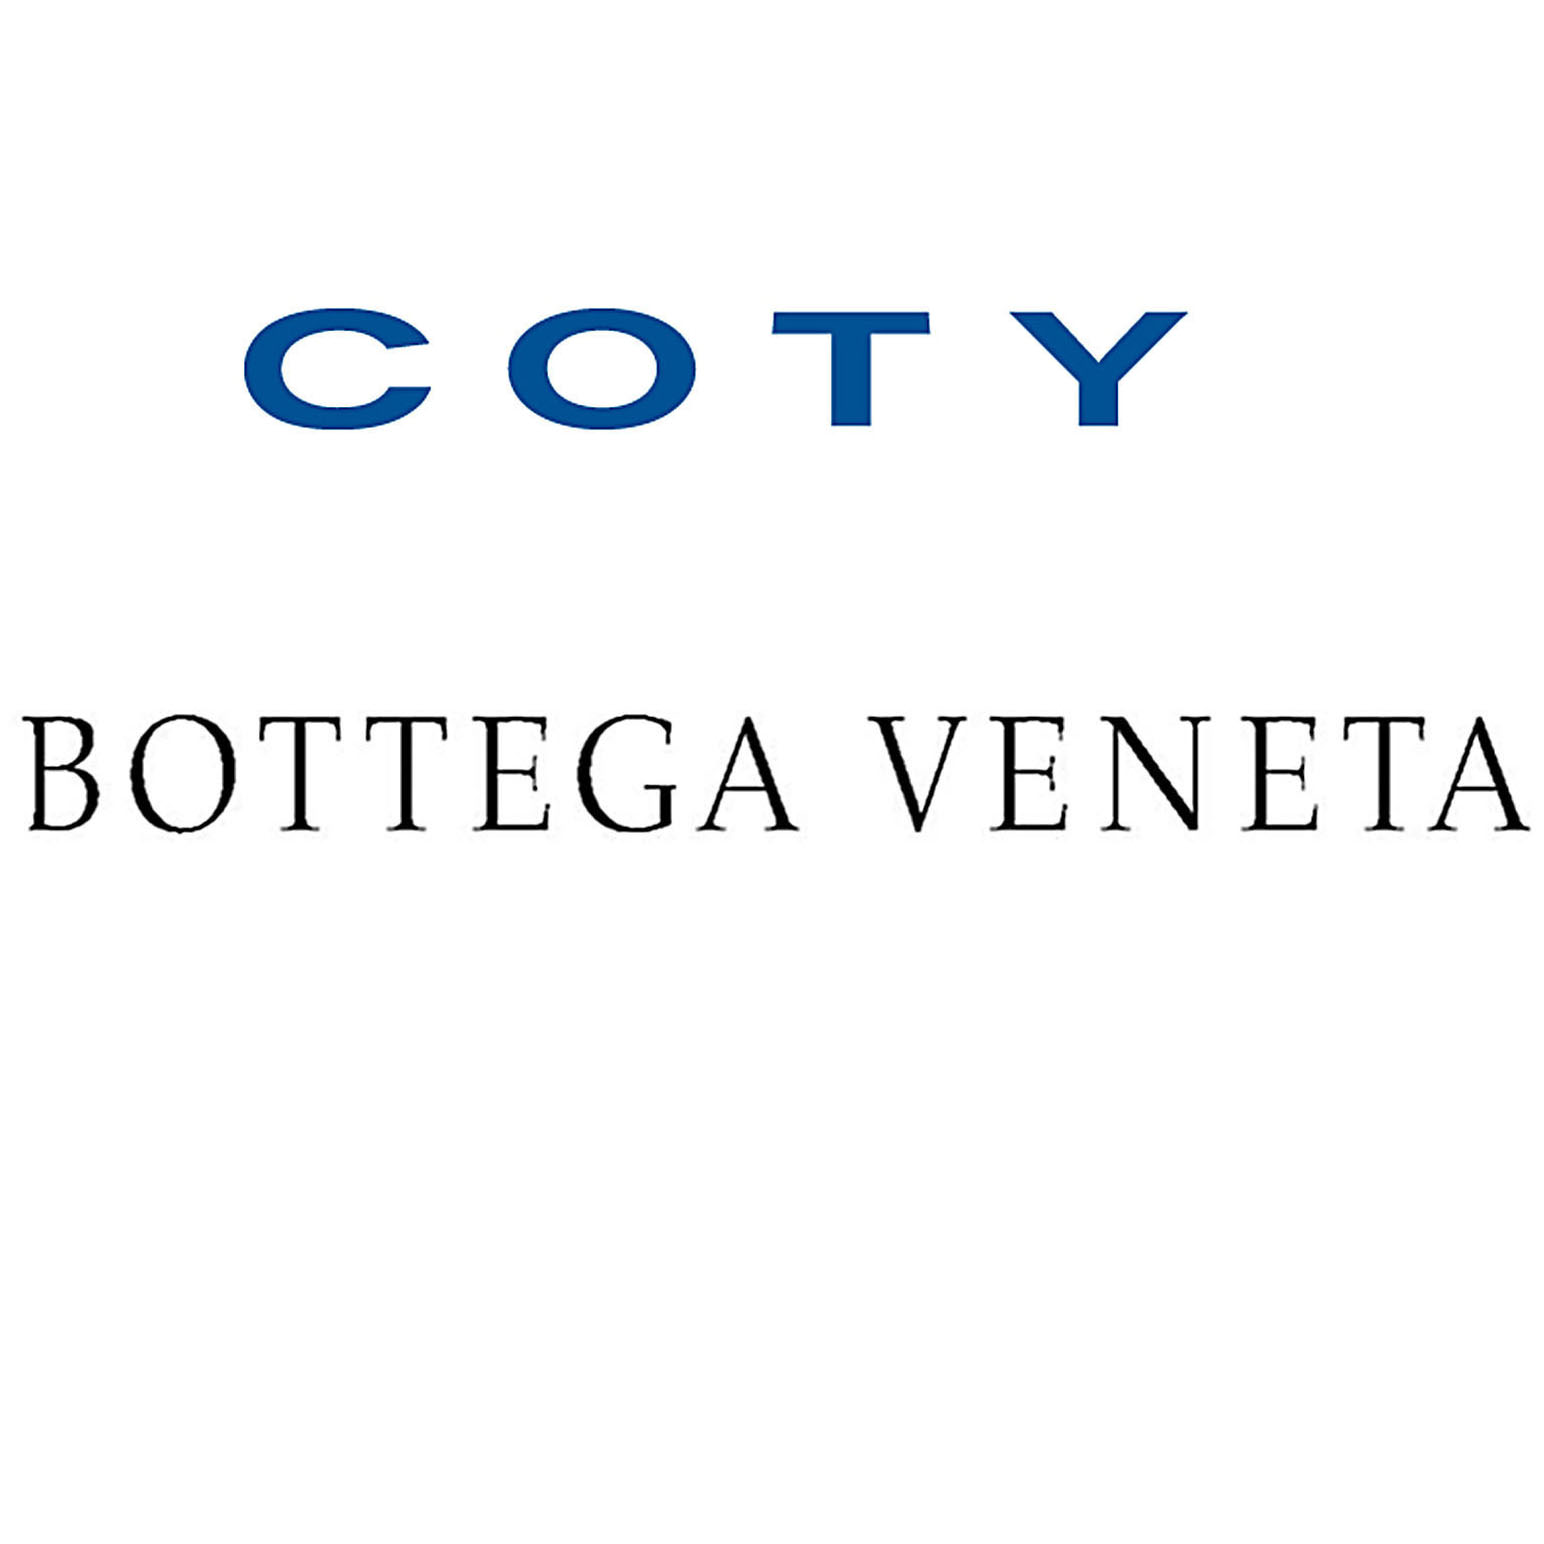 Bottega Veneta to Launch First Fragrance with Coty